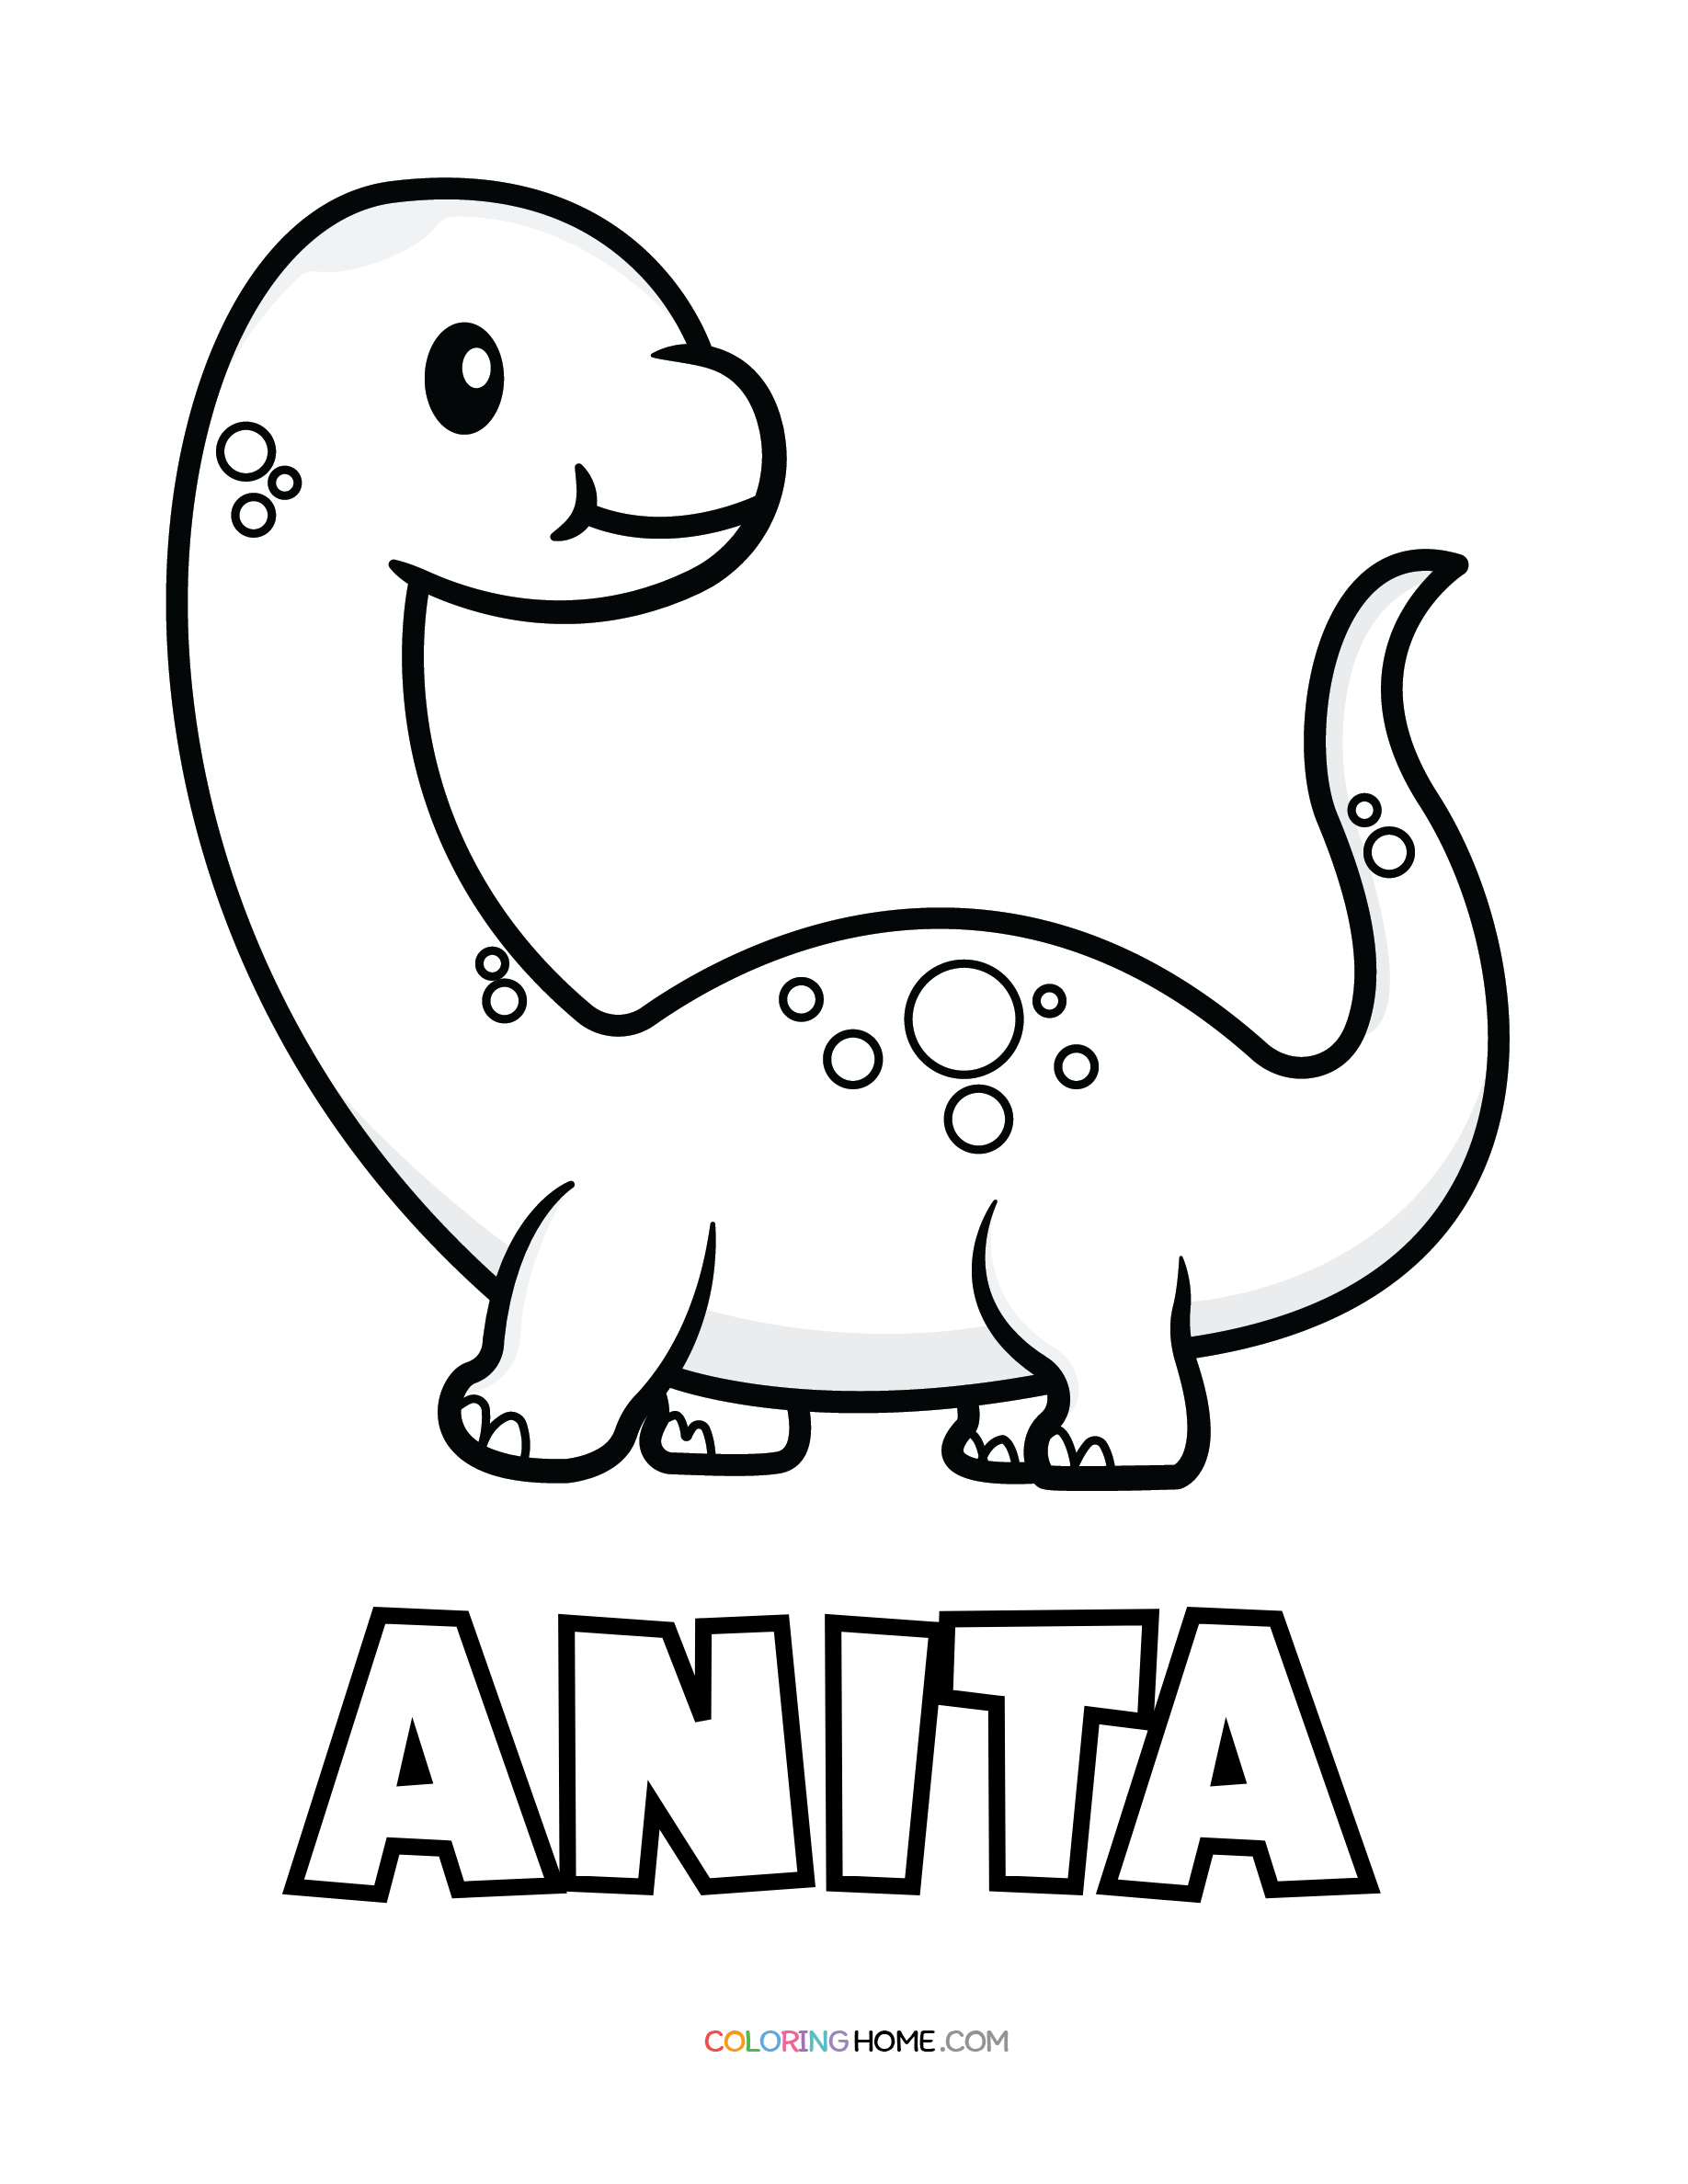 Anita dinosaur coloring page